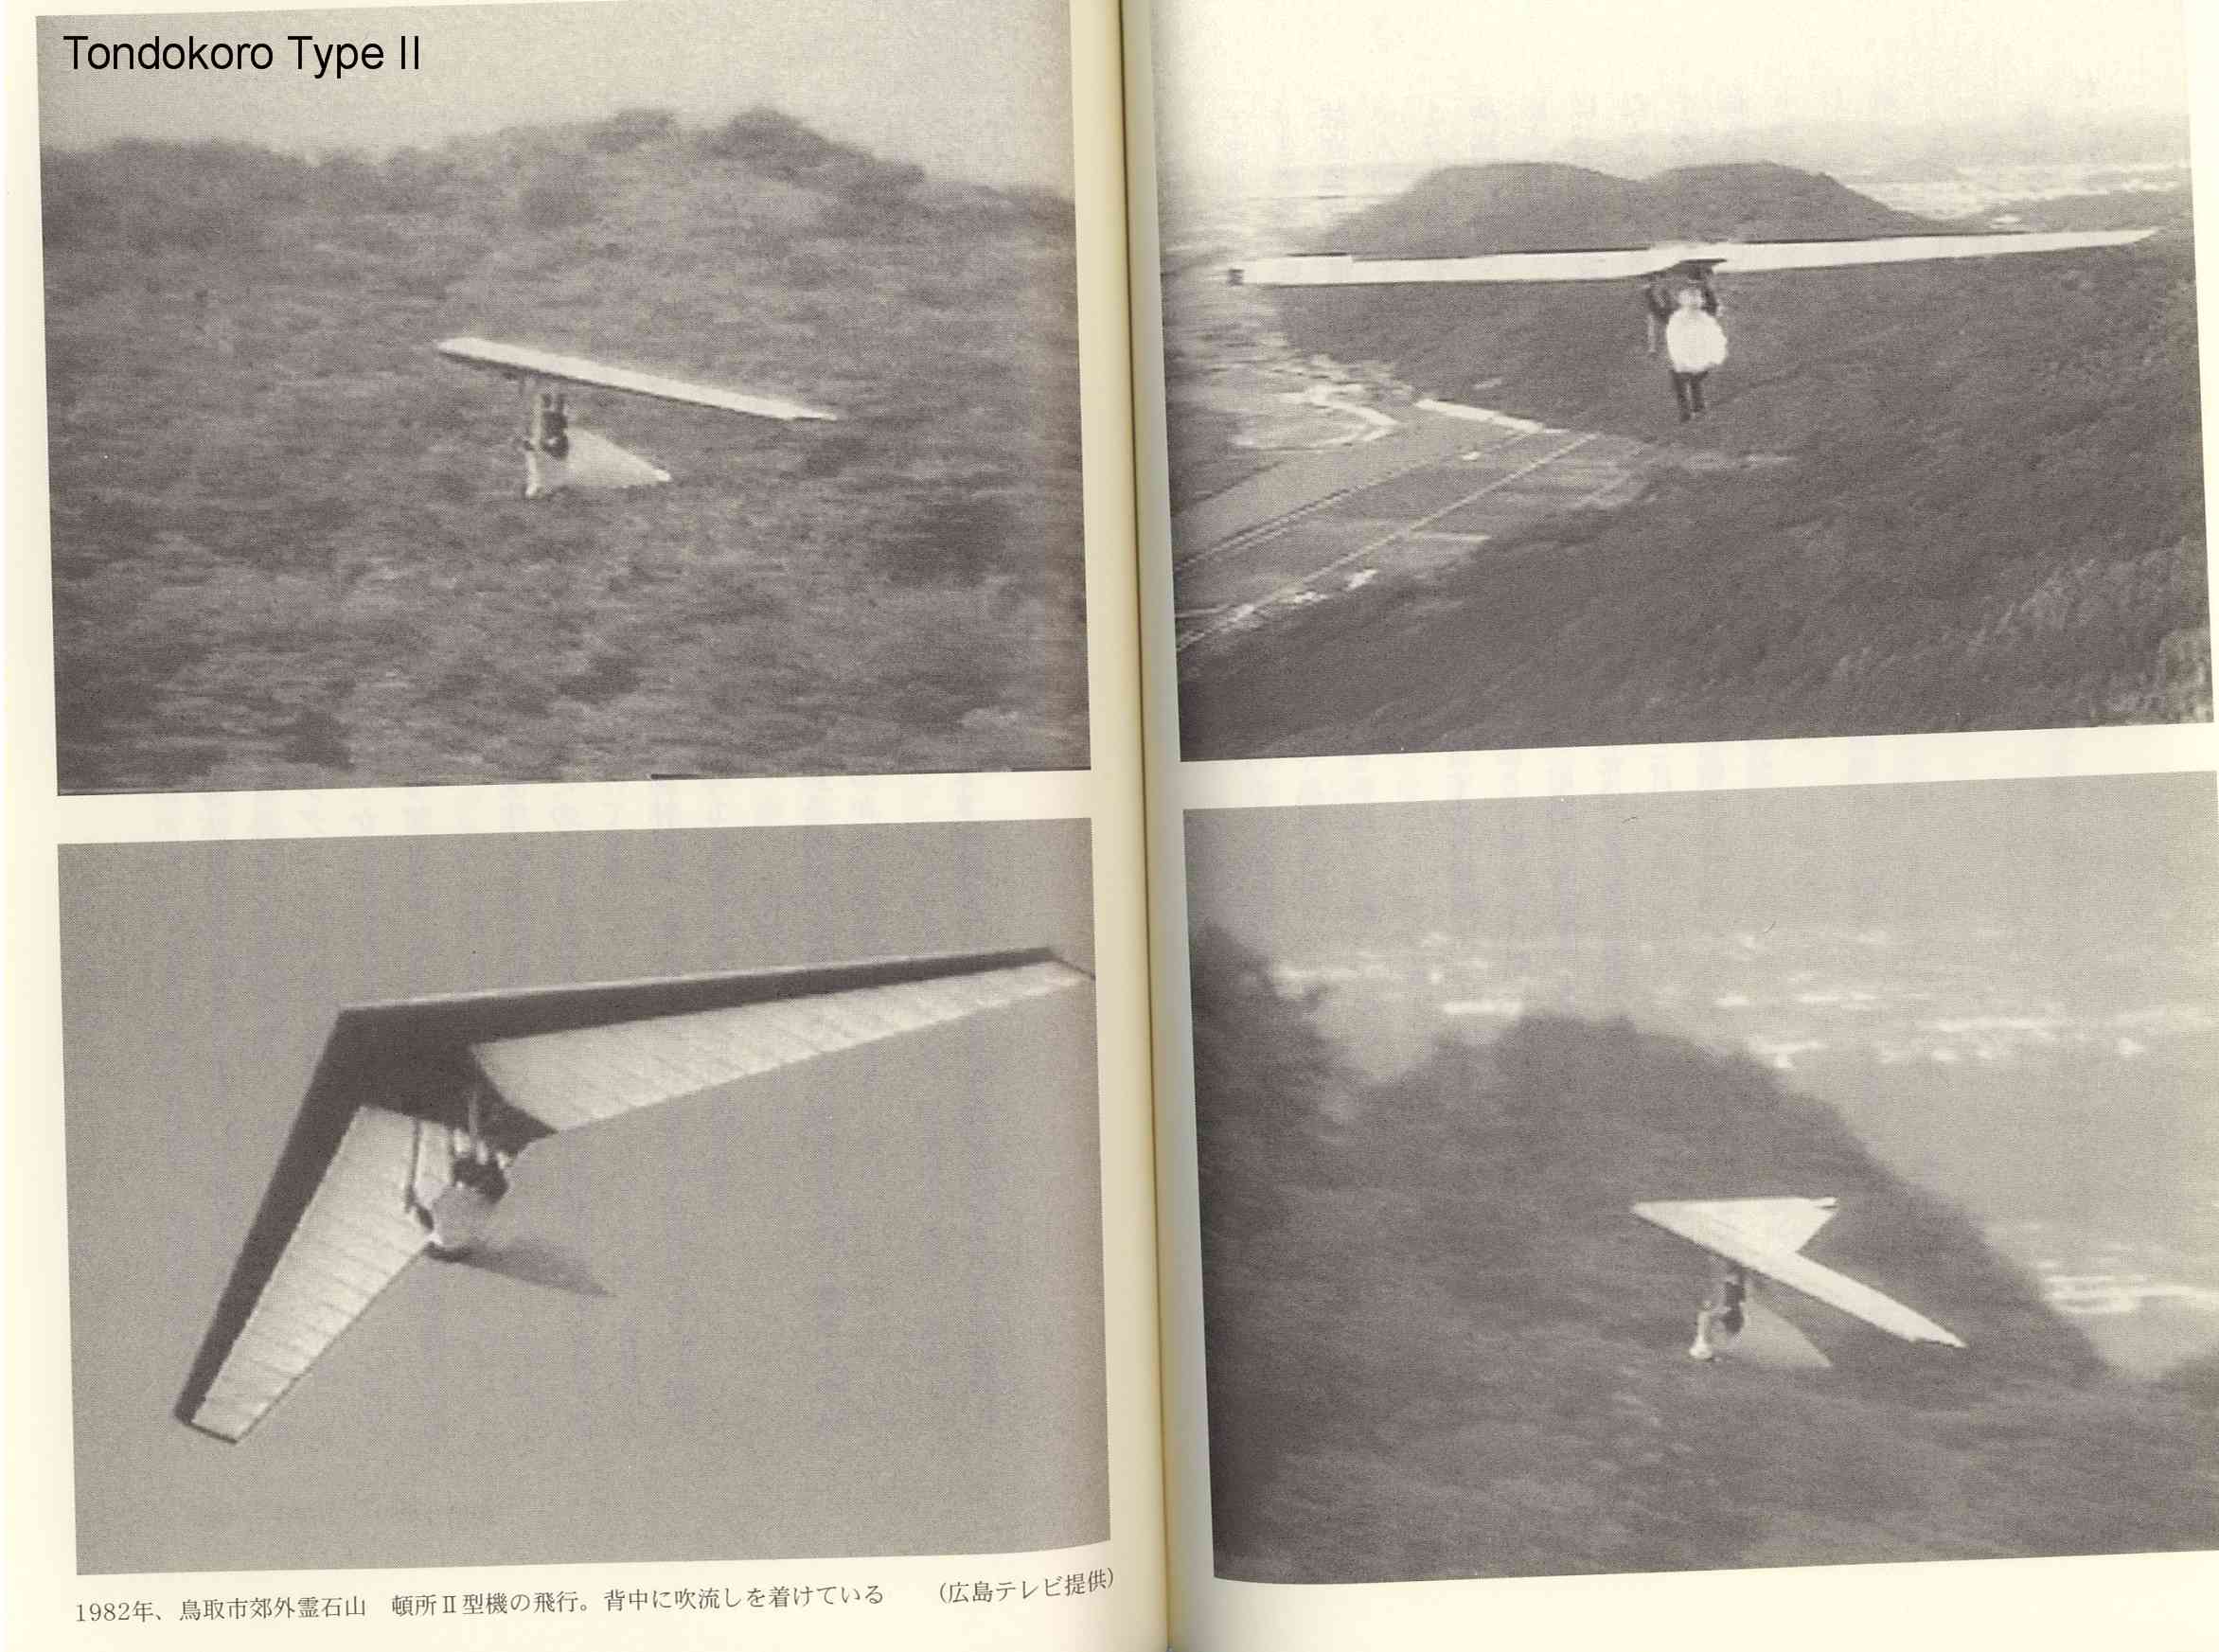 tondokoro type ii in flight 156